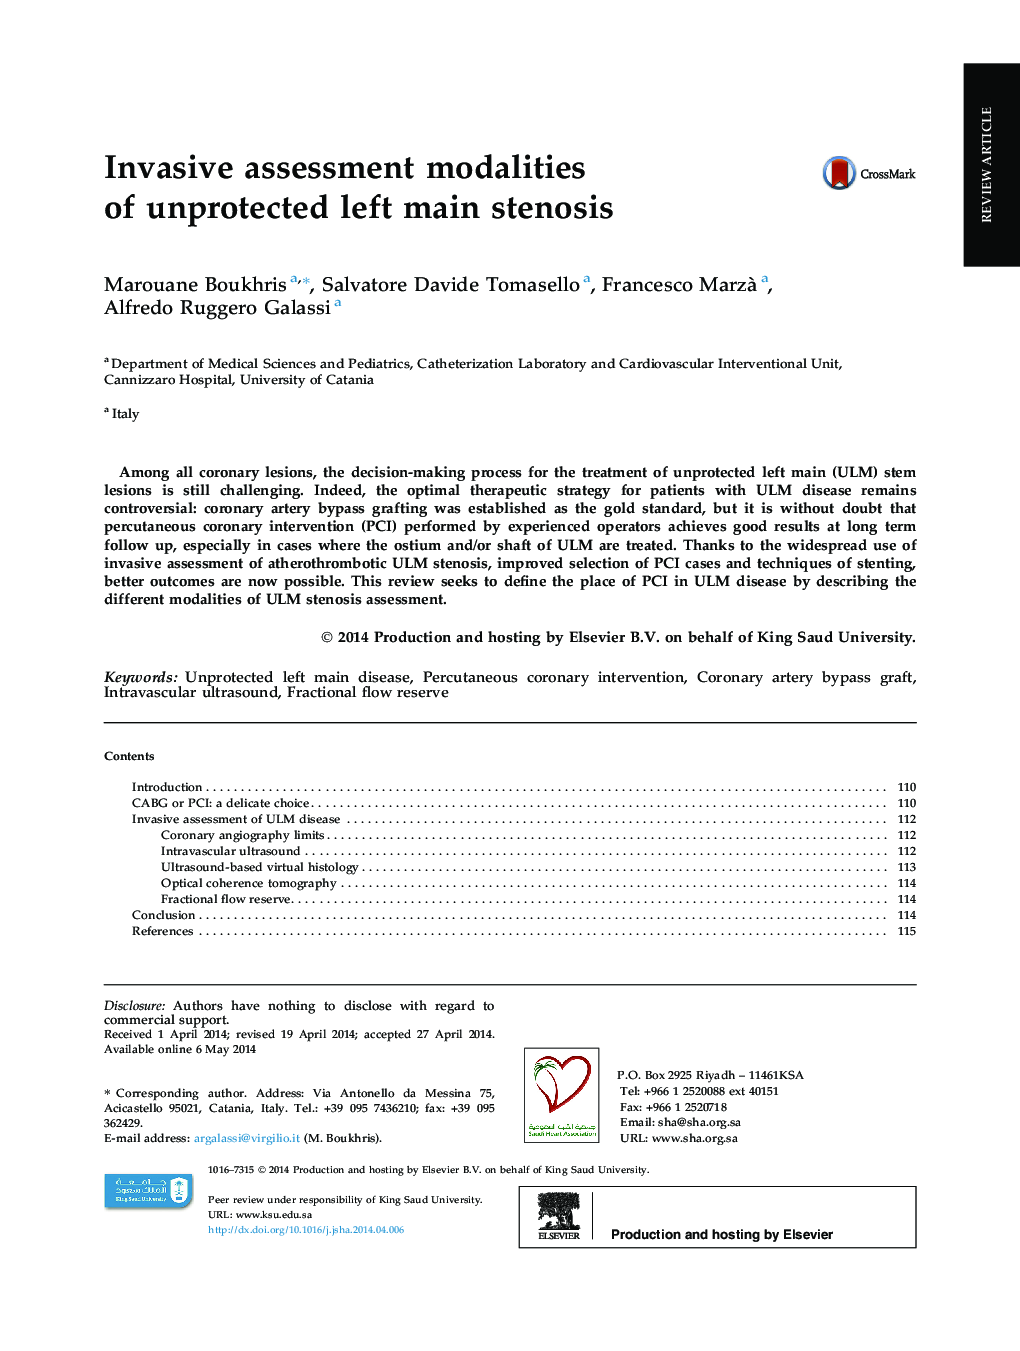 Invasive assessment modalities of unprotected left main stenosis 